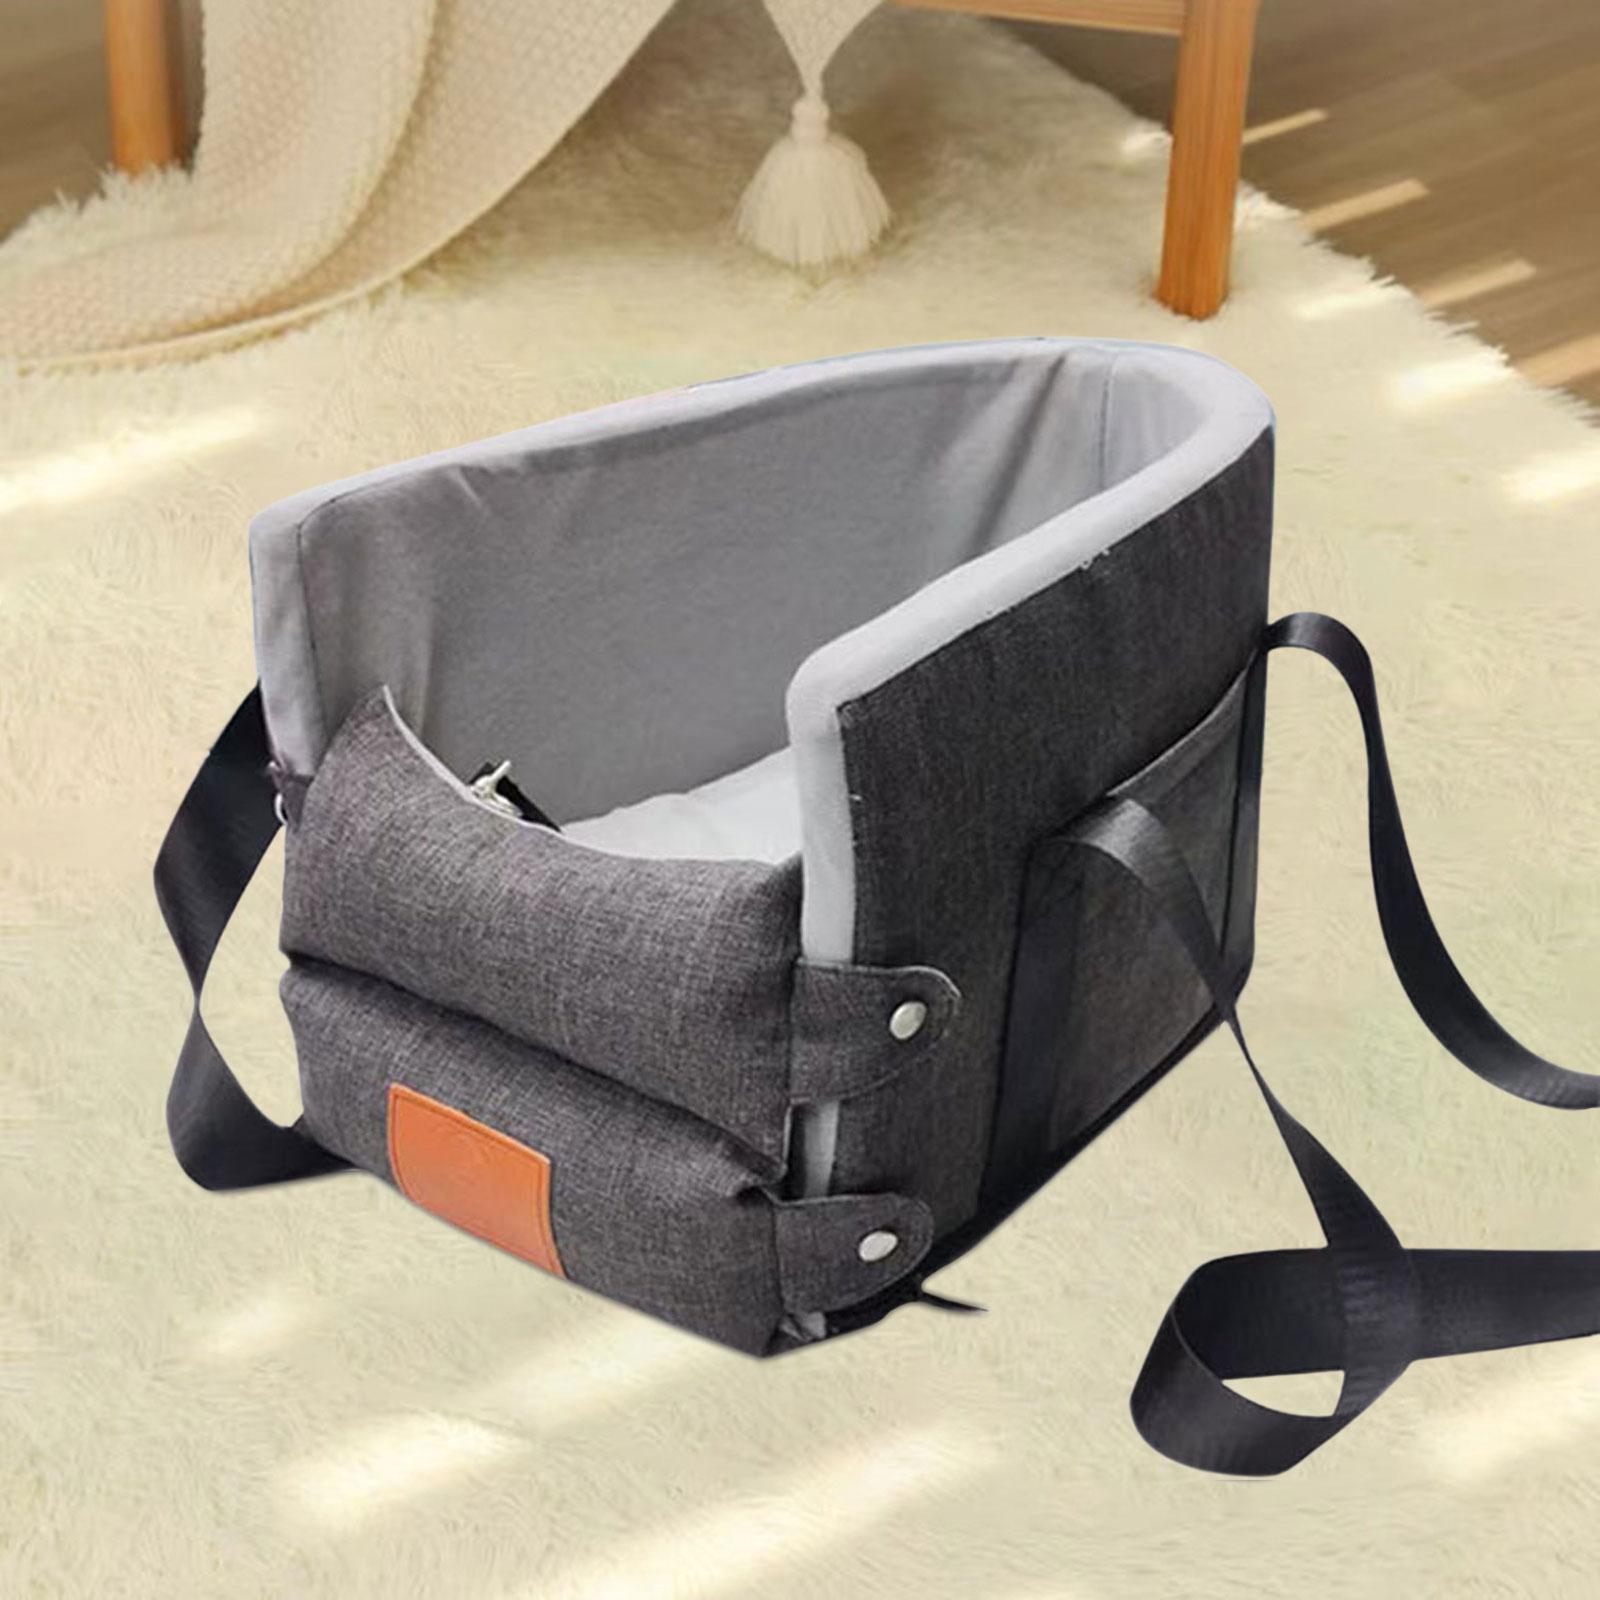 Center Console Dog Seat Portable Detachable and Washable Small Dog Handbag